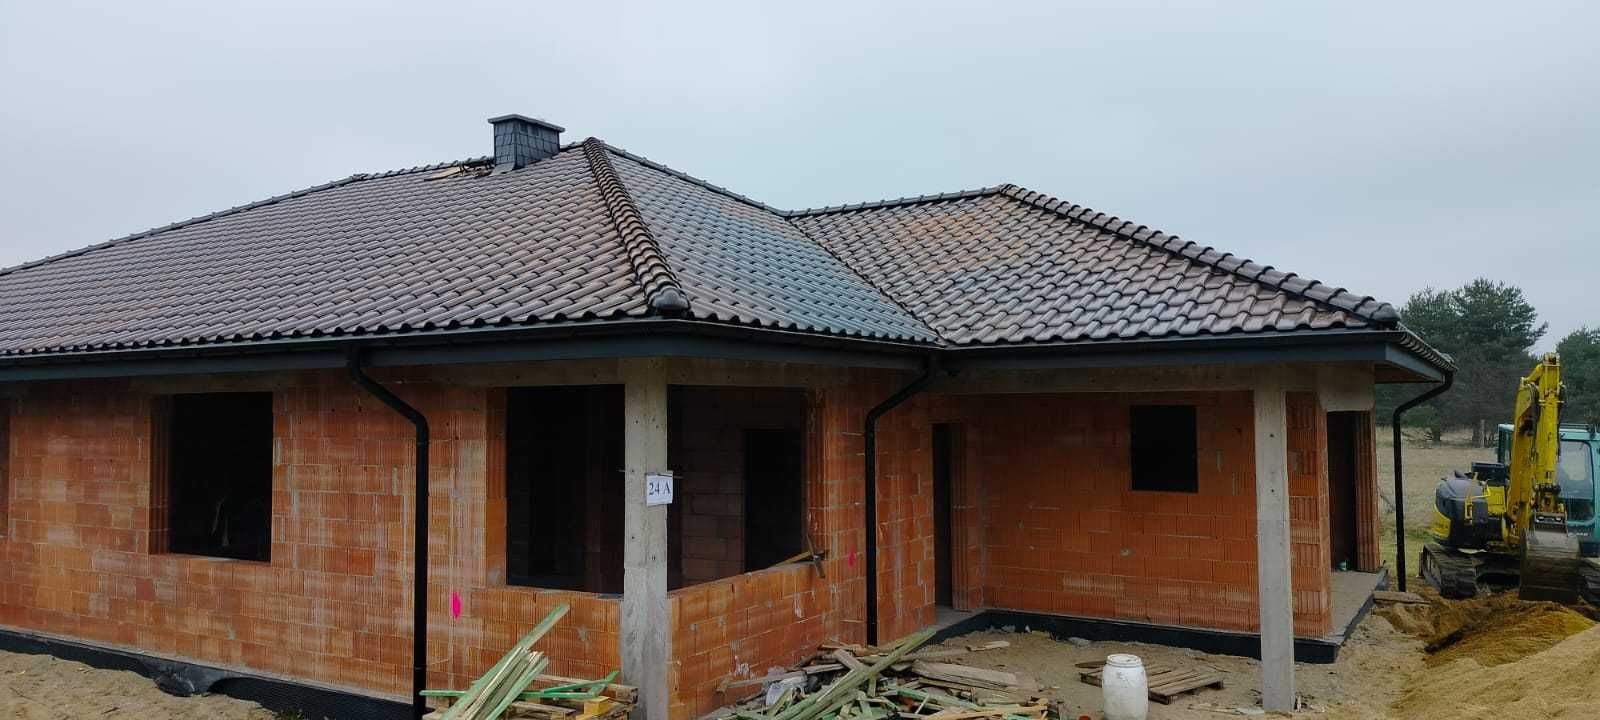 remont dachu nadbudowa piętra kupno poddasza